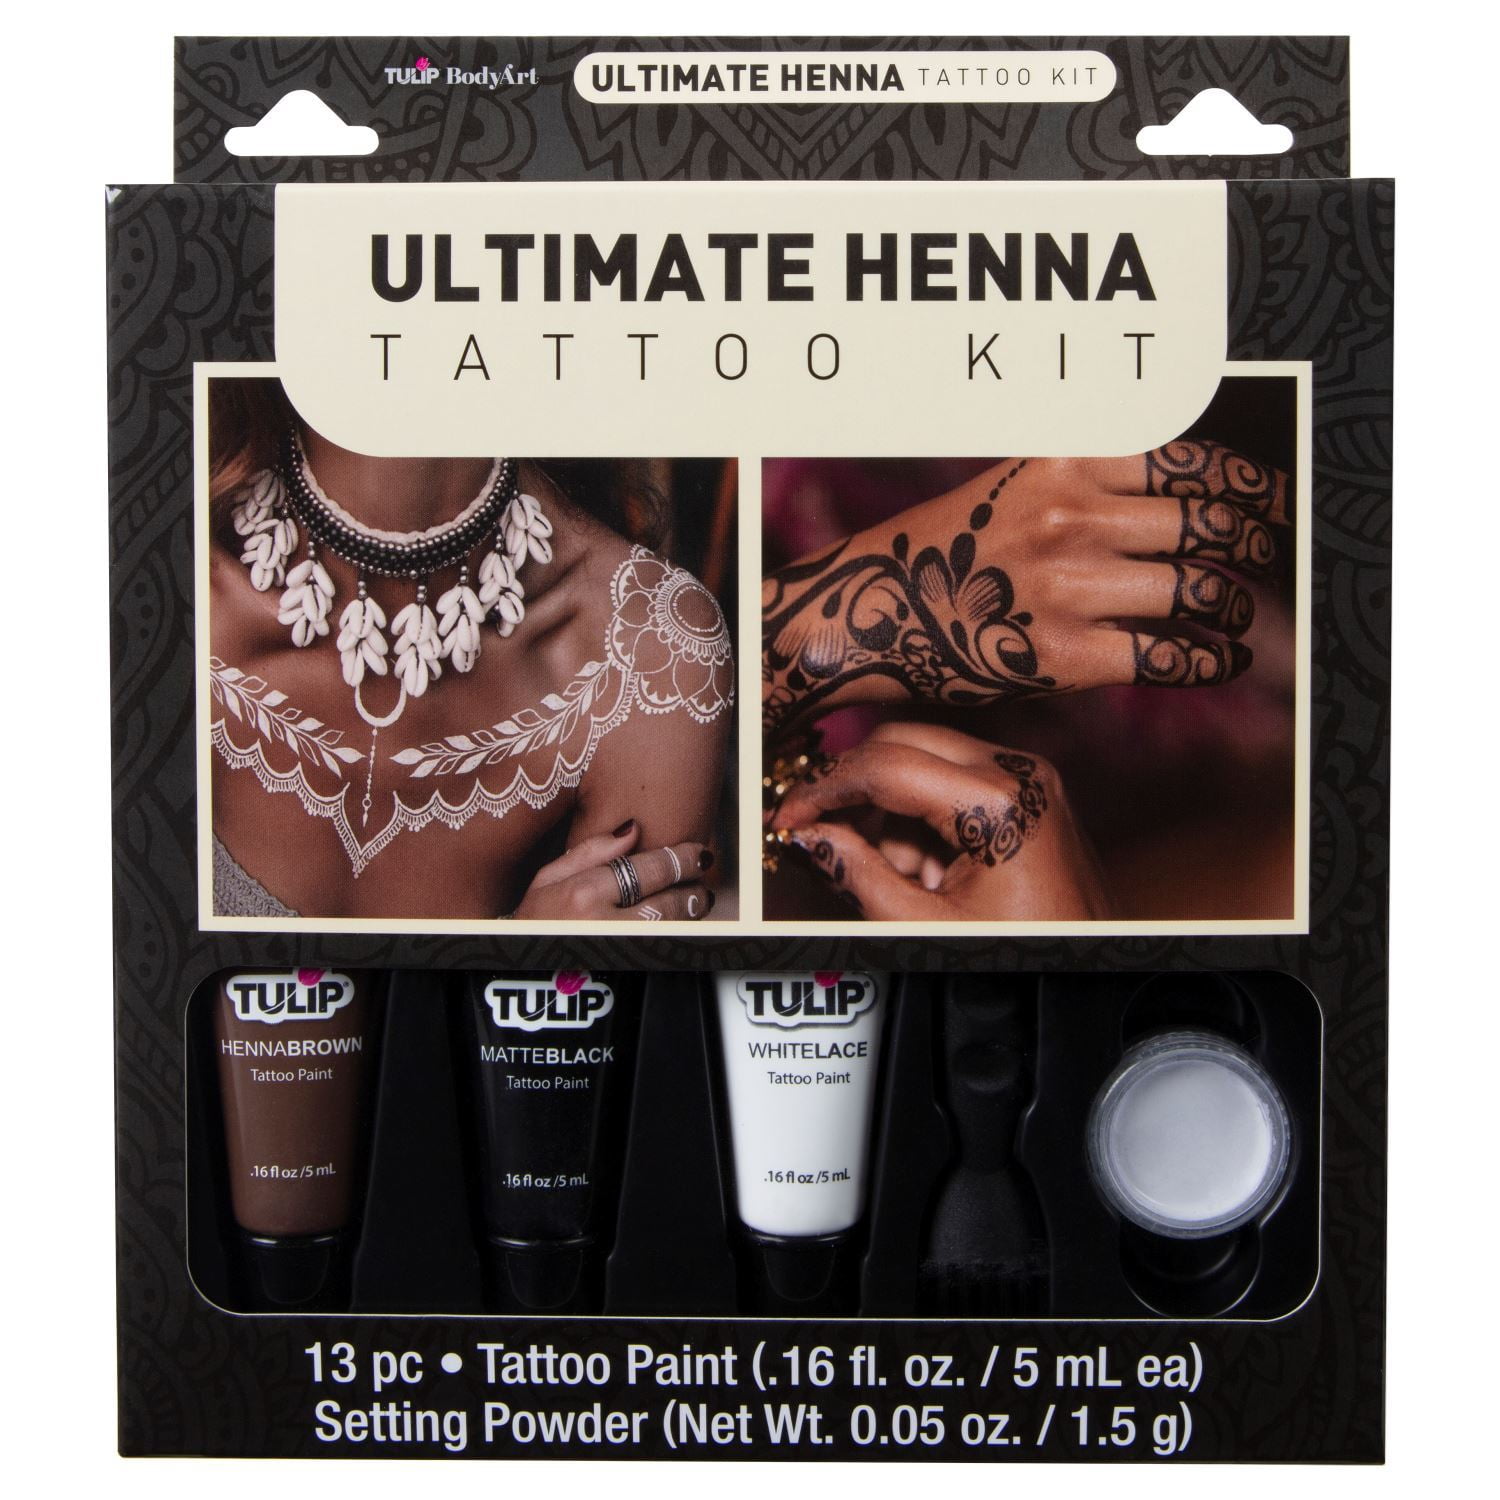 Tulip Ultimate Henna Inspired Kit, Black, Brown, White, Temporary Body Tattoo, Look of Henna@walmart